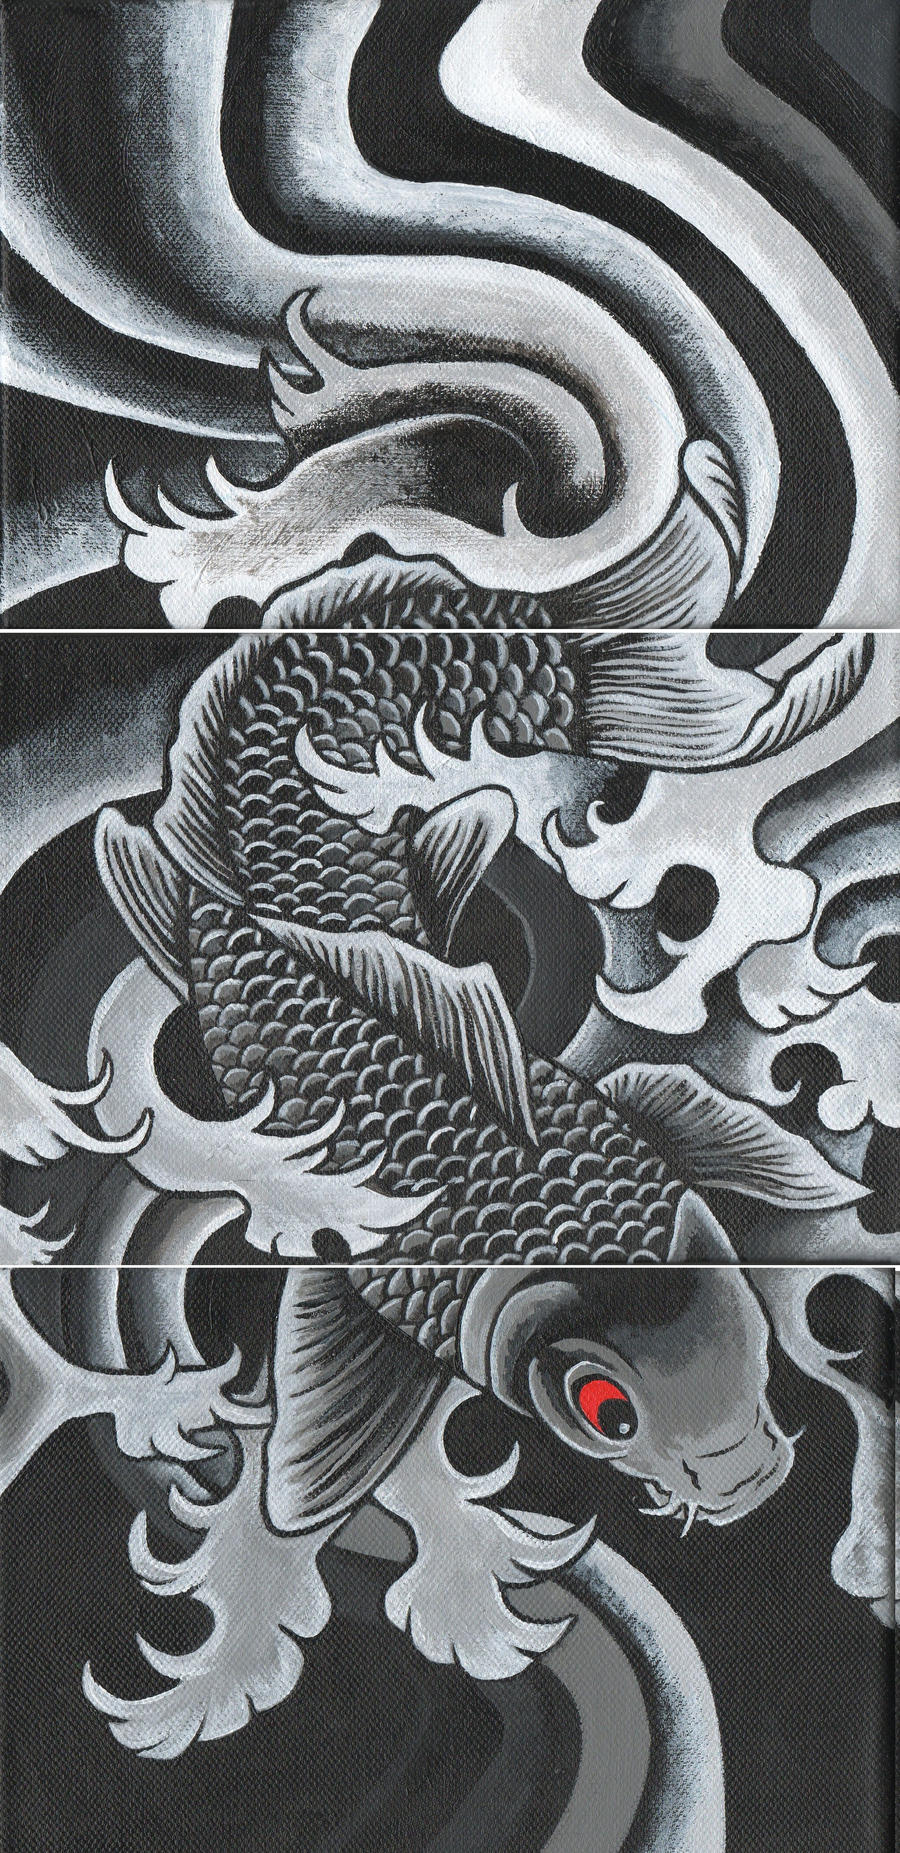 Koi Fish Painting by dieselboy666 on DeviantArt